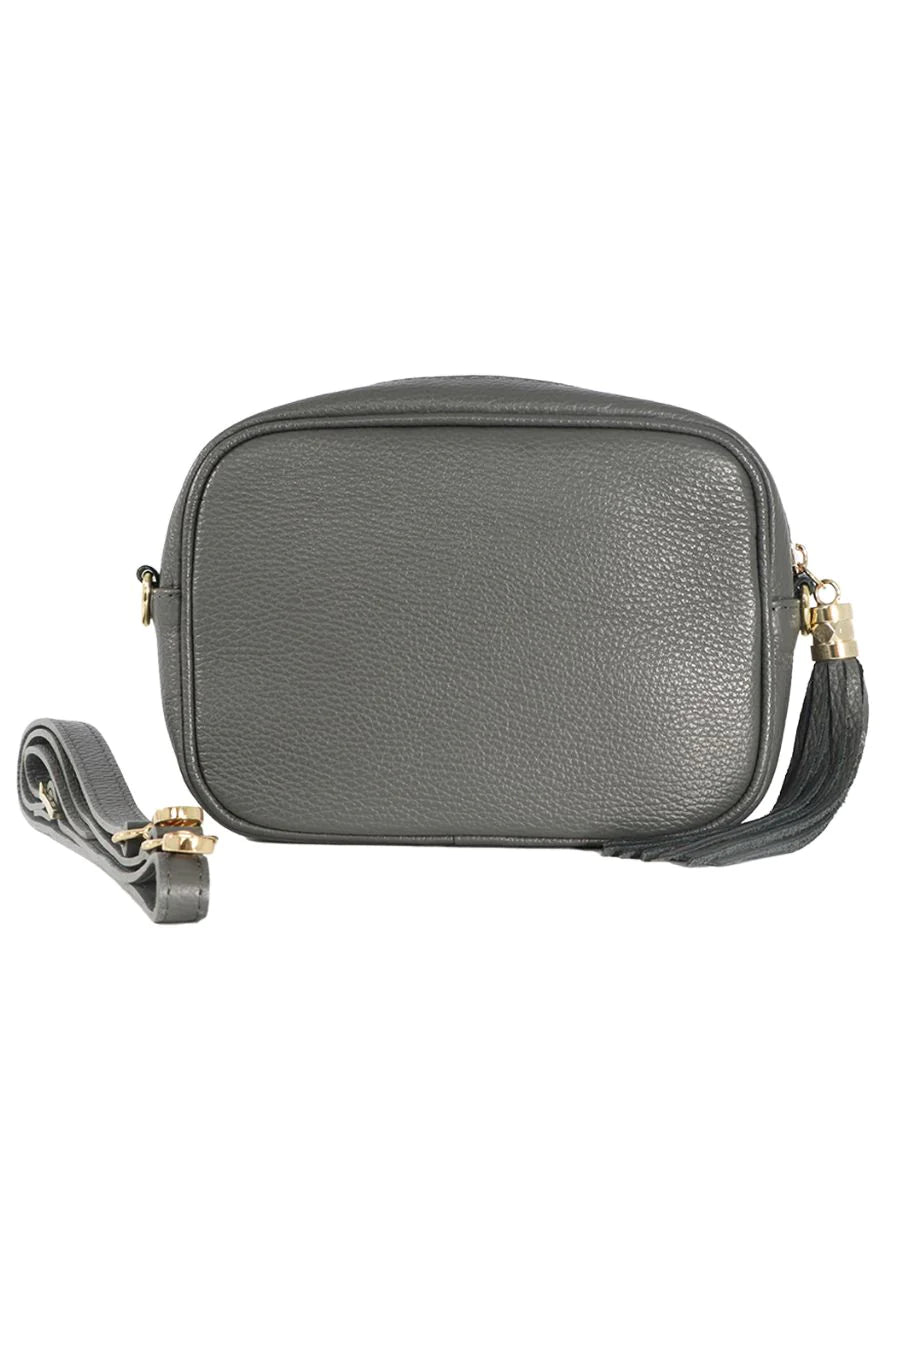 Italian Leather Dark Grey Camera Bag